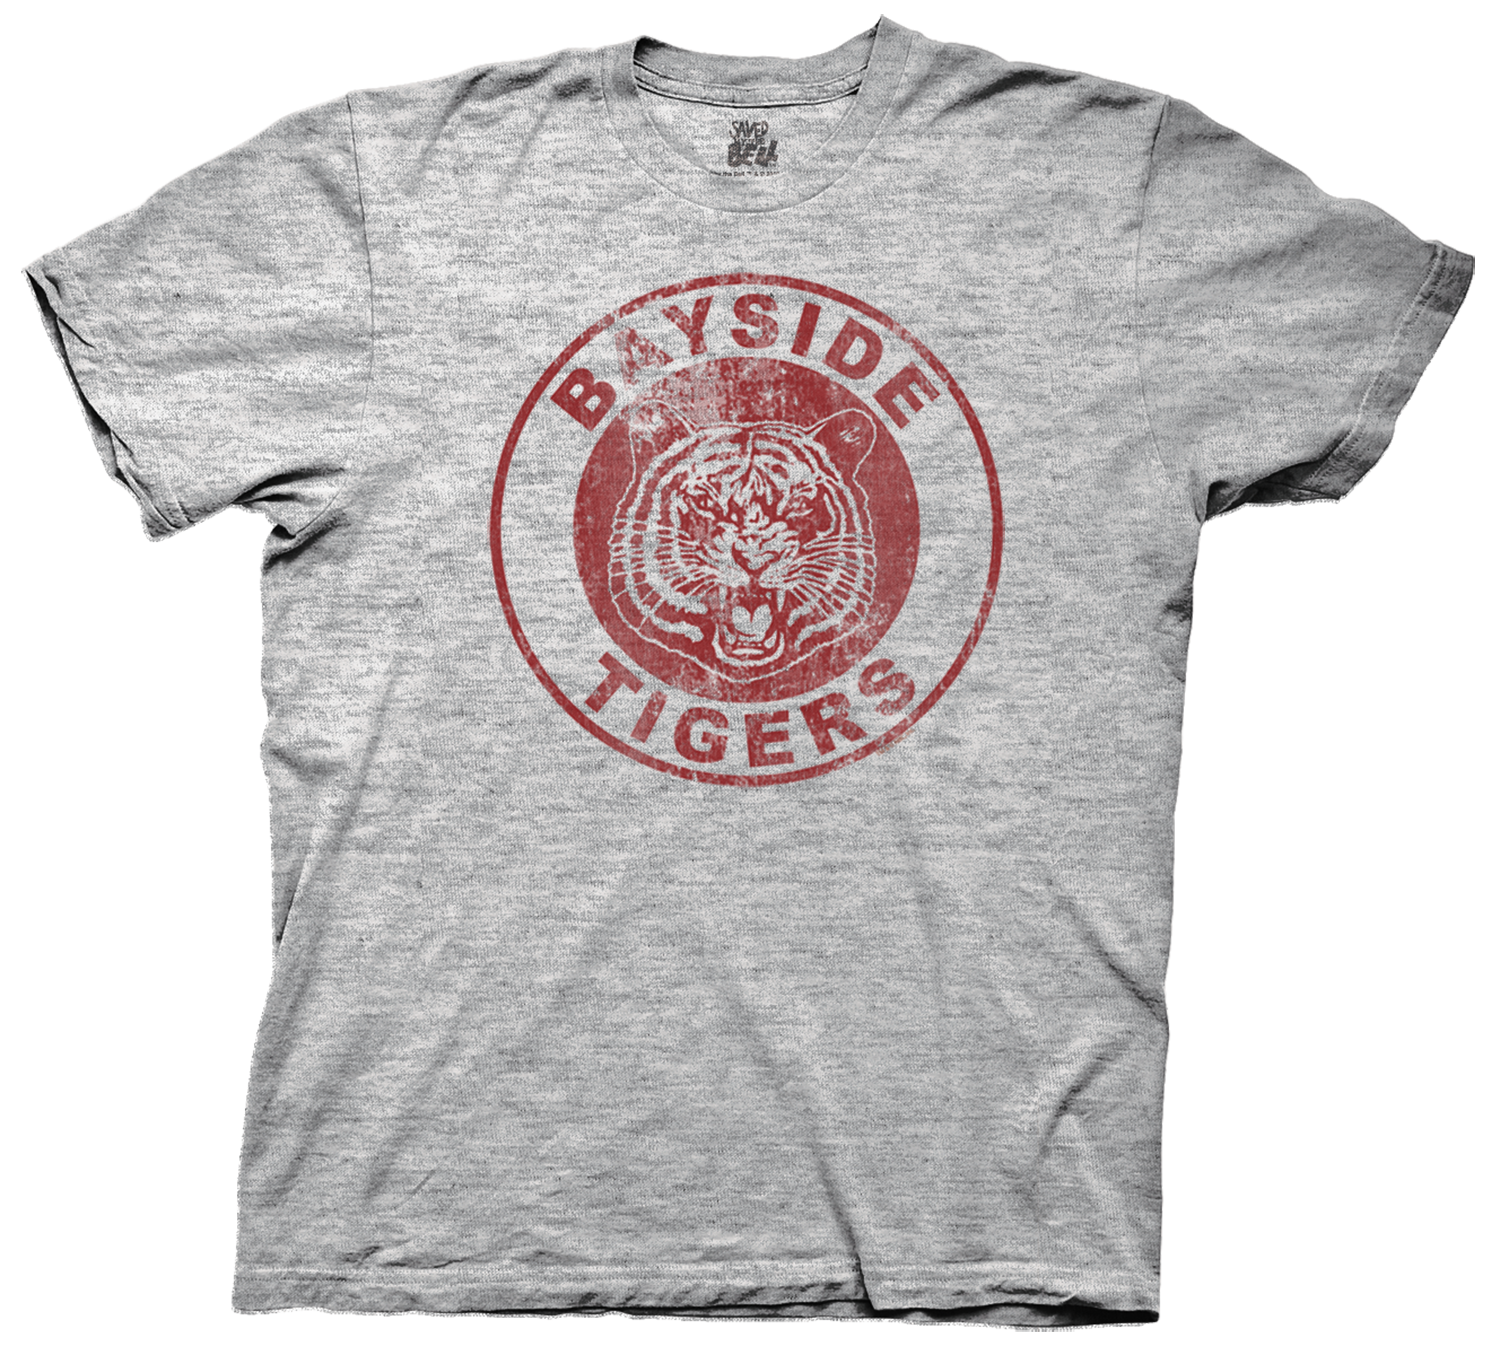 detroit tigers polish t shirt